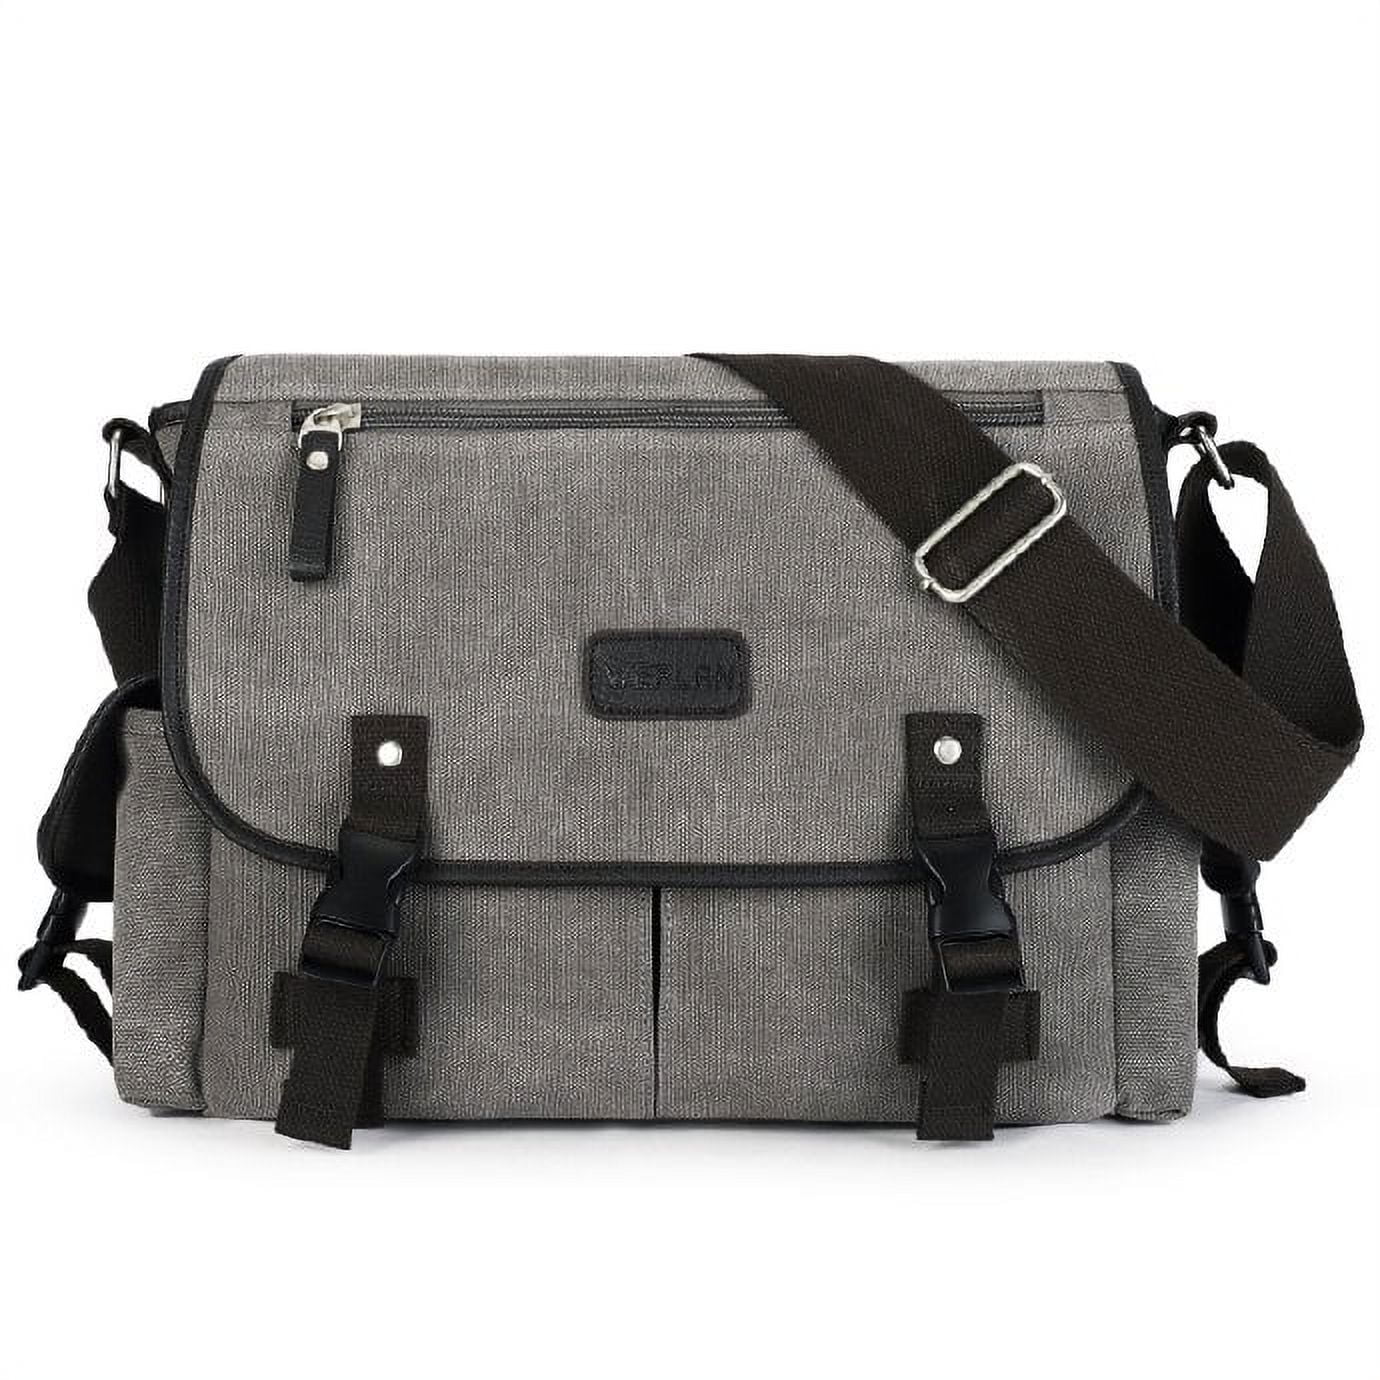 SYCNB Messenger Bag for Men,Water Resistant Unisex Canvas Shoulder Bag,Vintage Military Crossbody Bag,14 inch Laptop Bag, Adult Unisex, Size: Small, Green